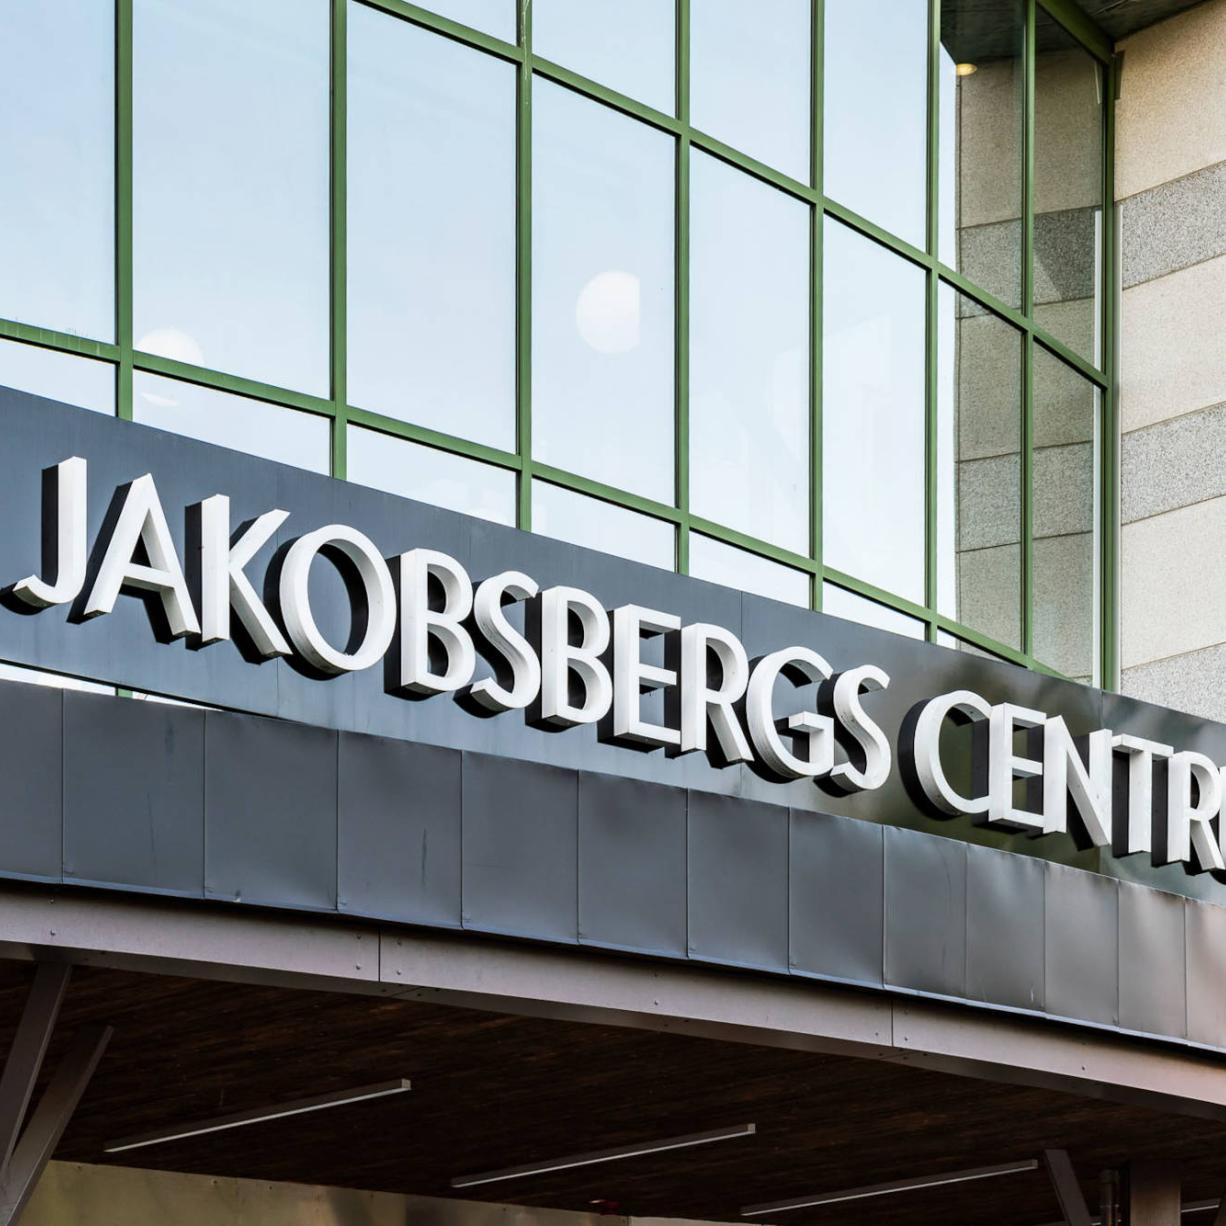 Jakobsbergs Centrum signage